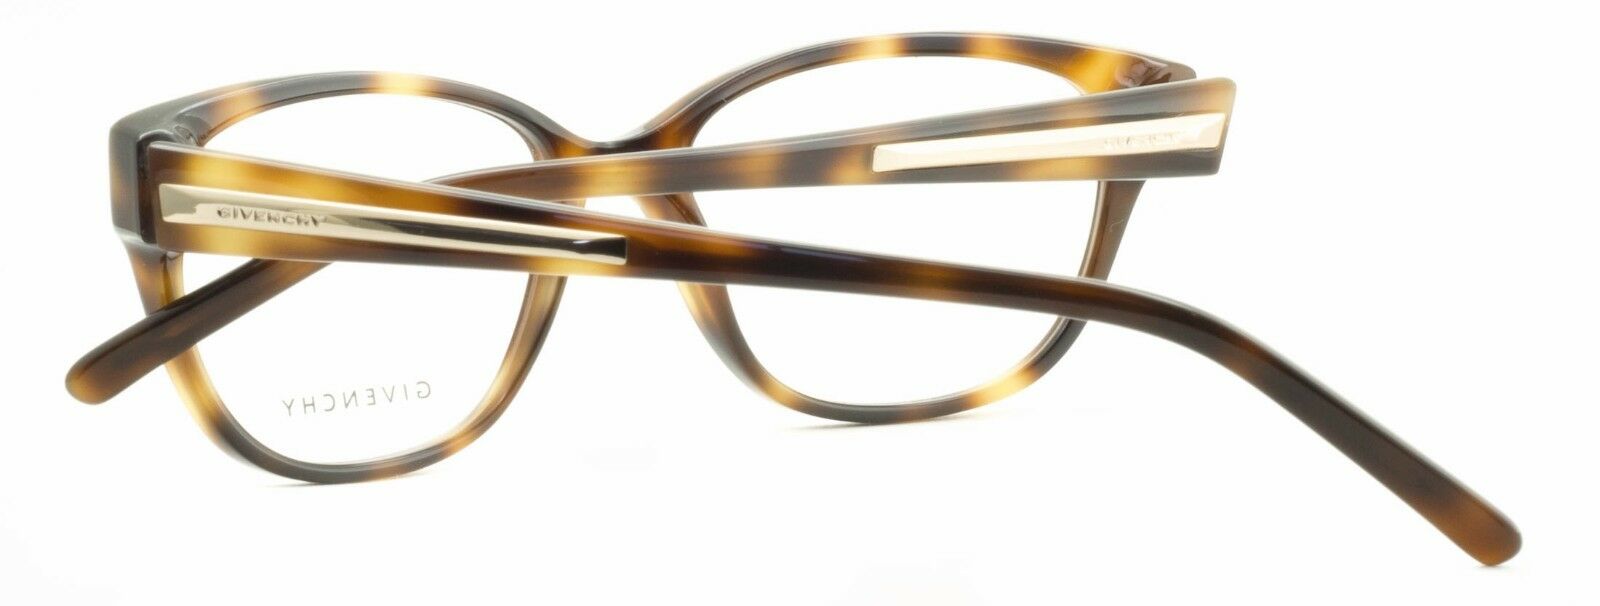 GIVENCHY VGV 787 COL 752N Eyewear FRAMES RX Optical Eyeglasses Glasses - New